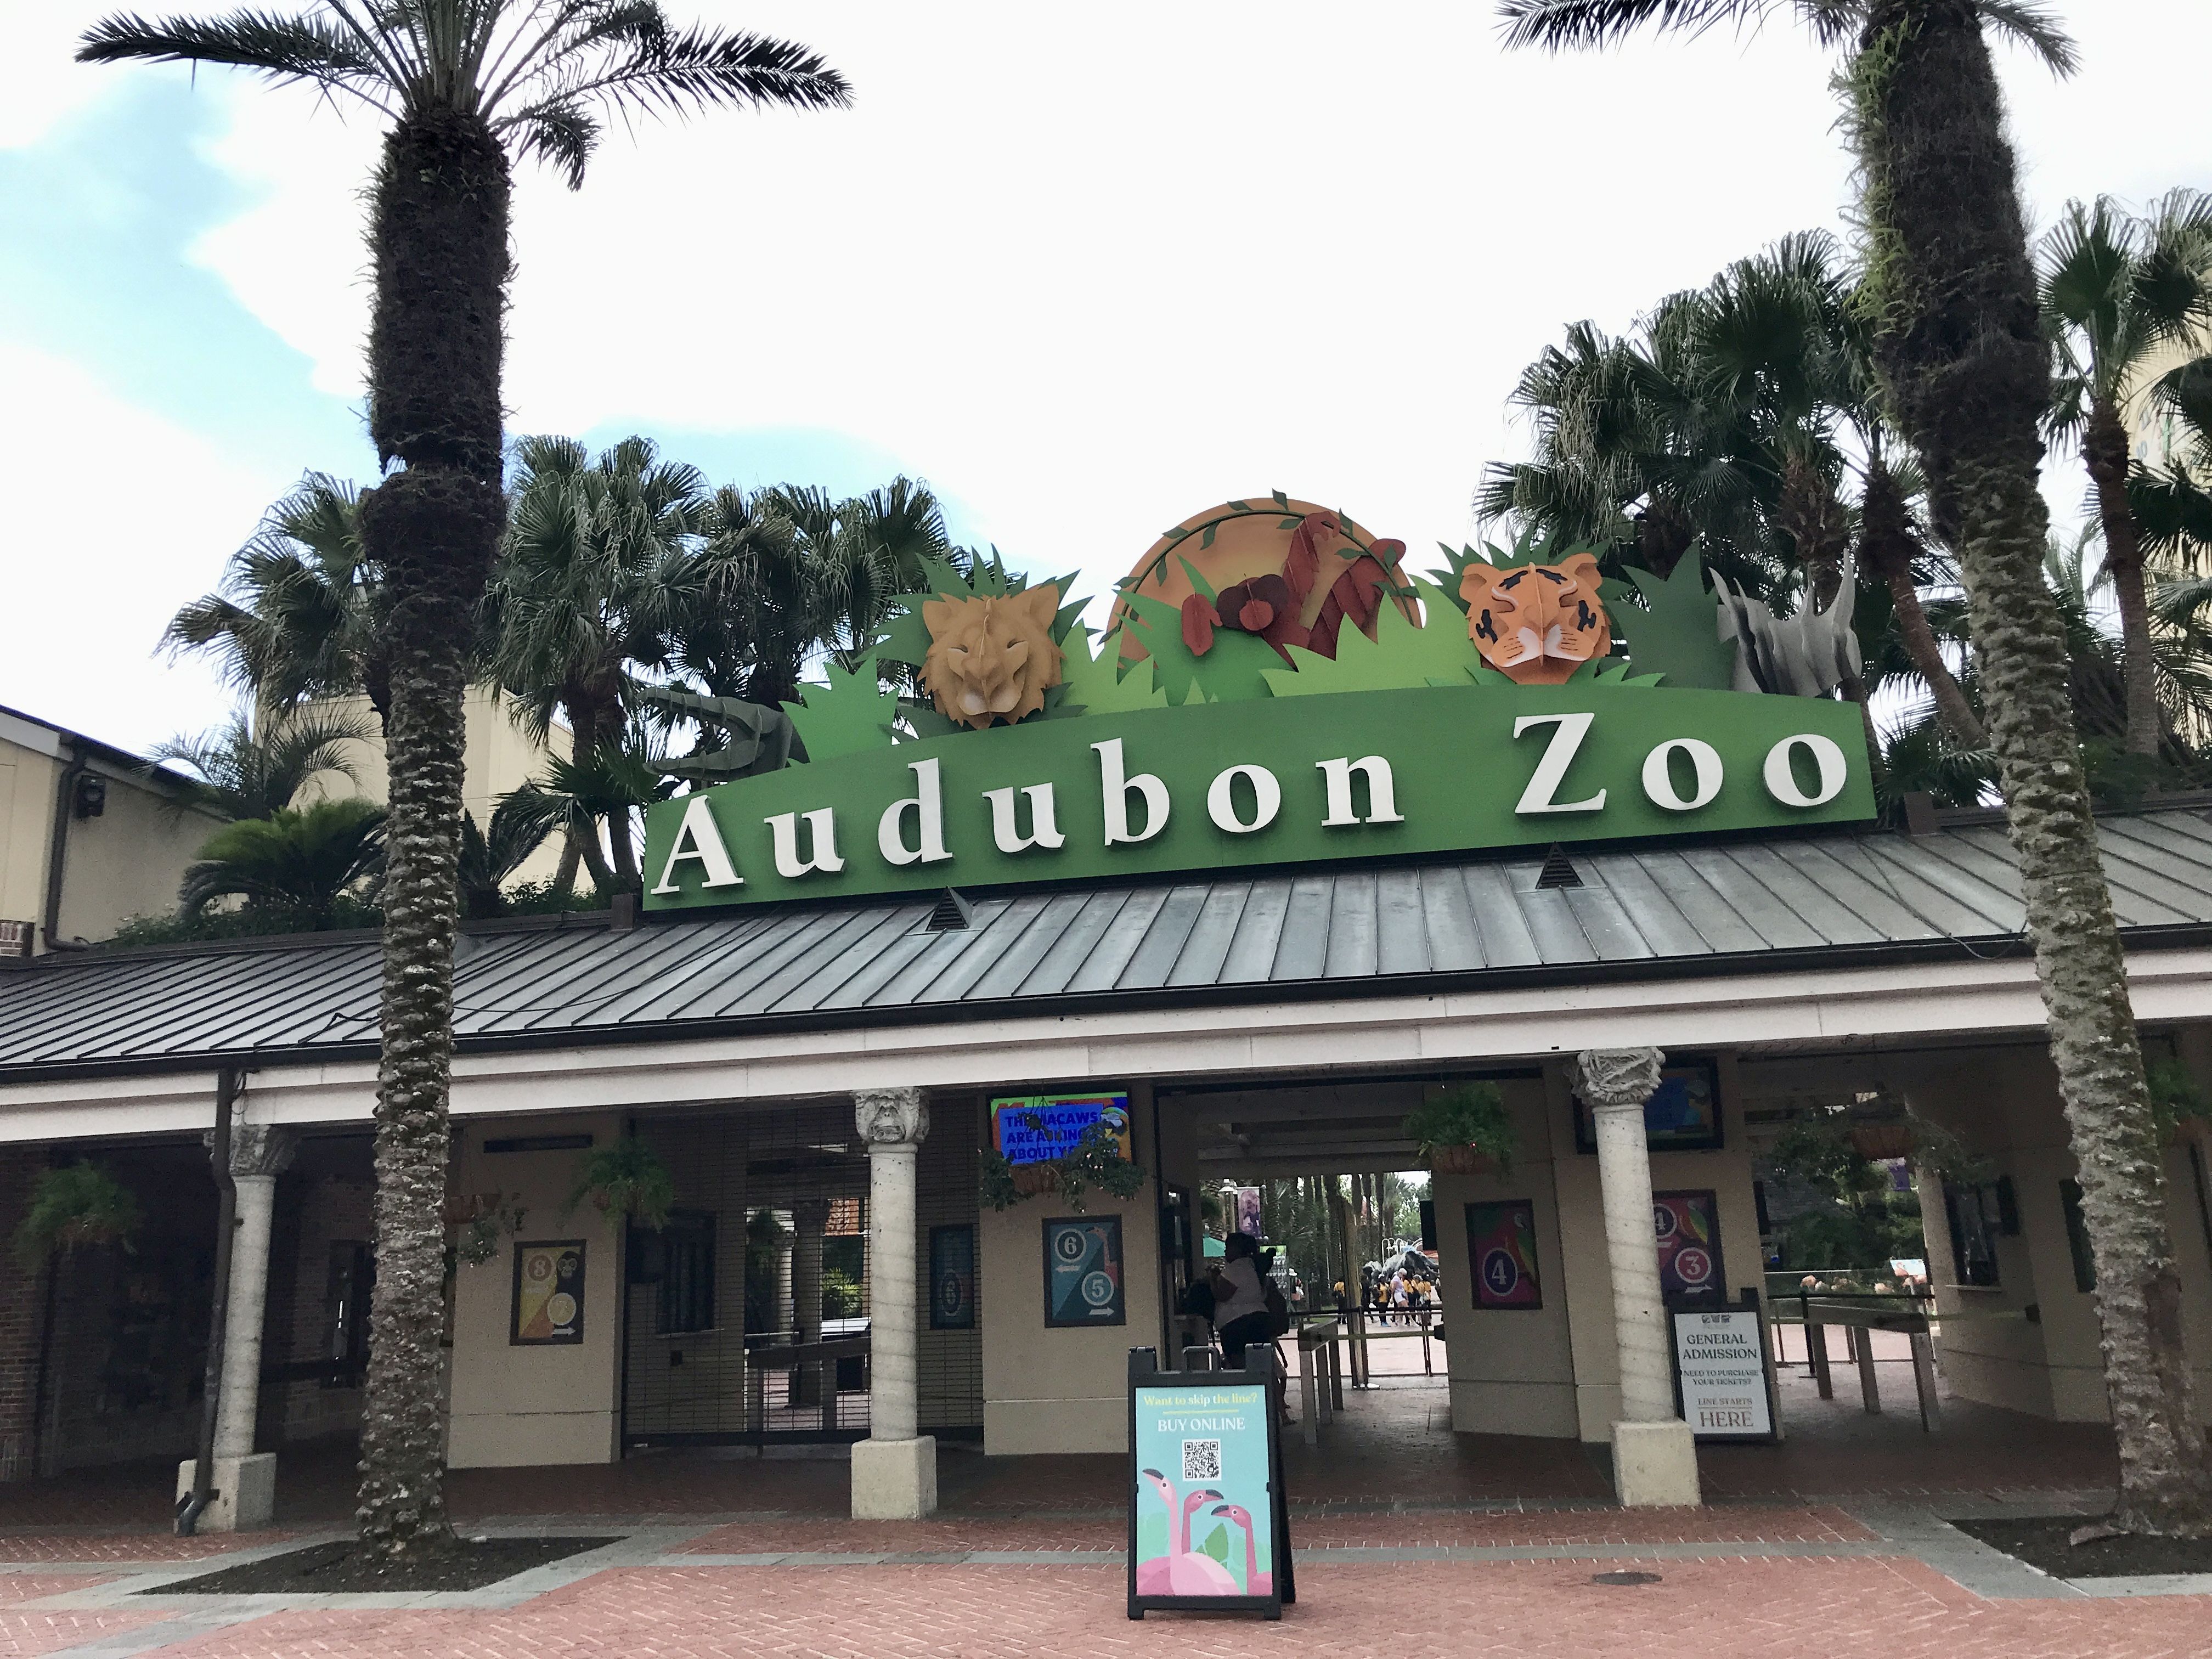 photo shows the entrance of Audubon Zoo